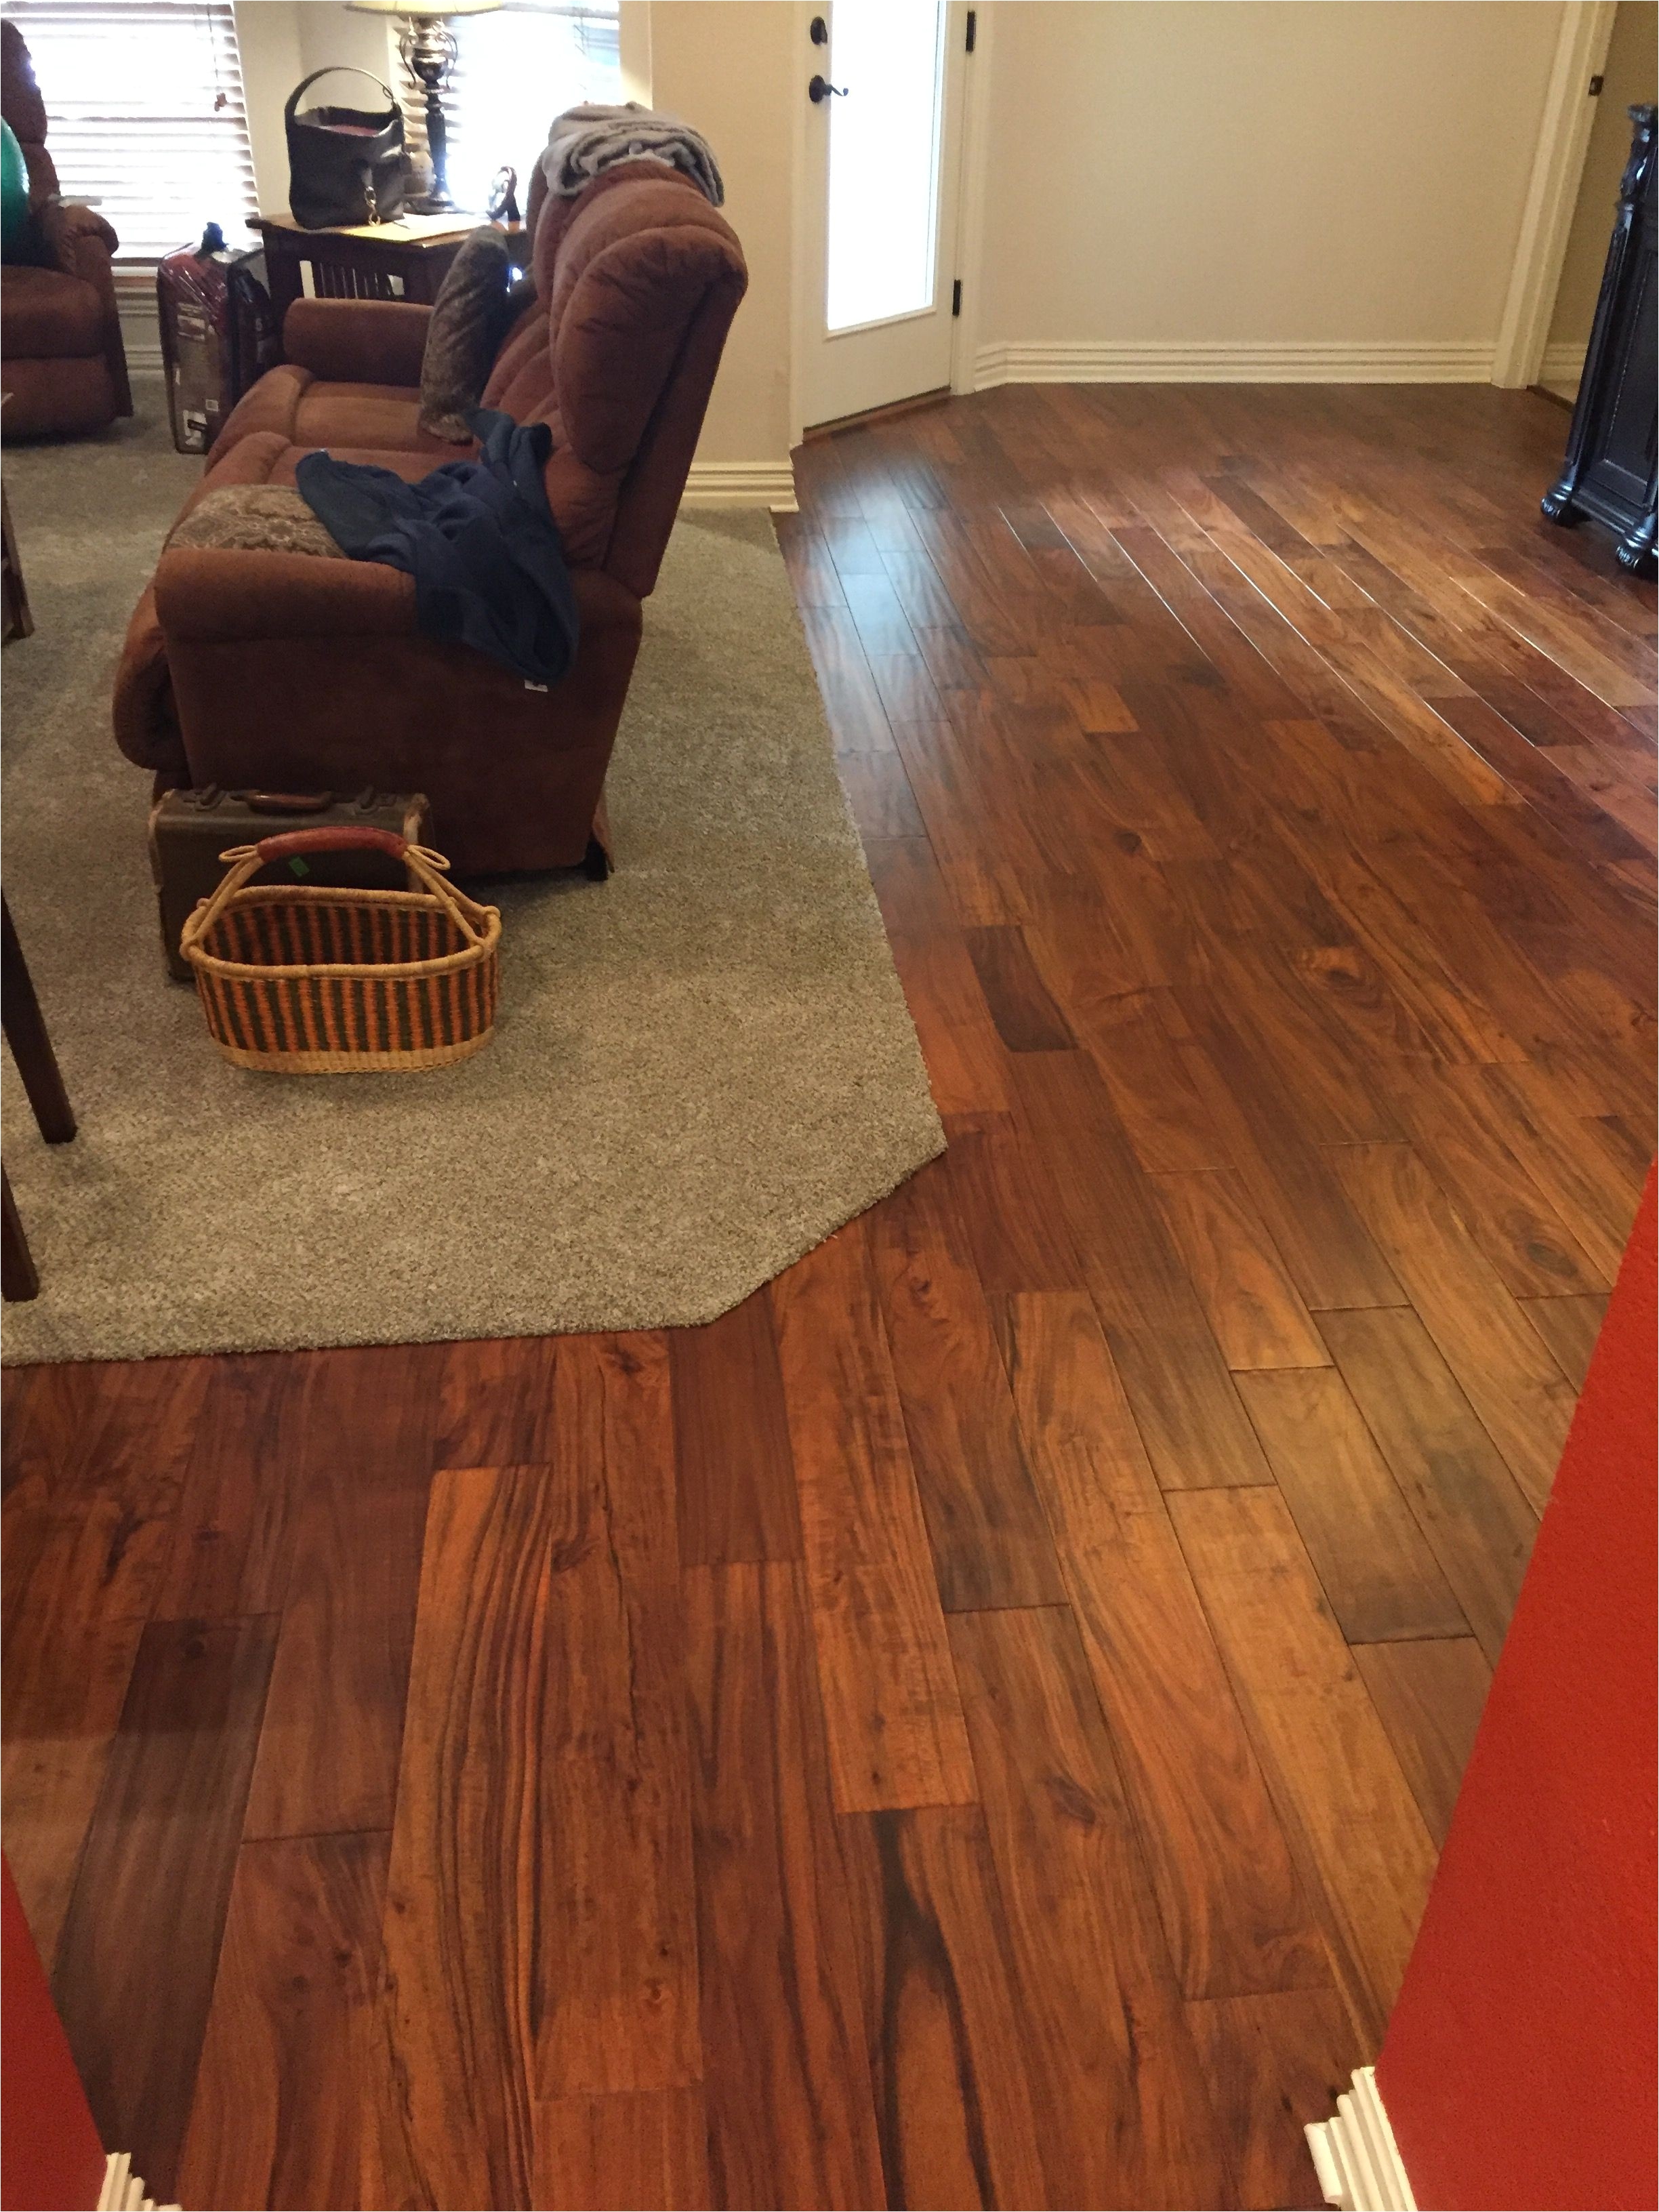 focus tobacco road acacia flooring wood floor with carpet inset laminate pinteresth home design willpower hardwood